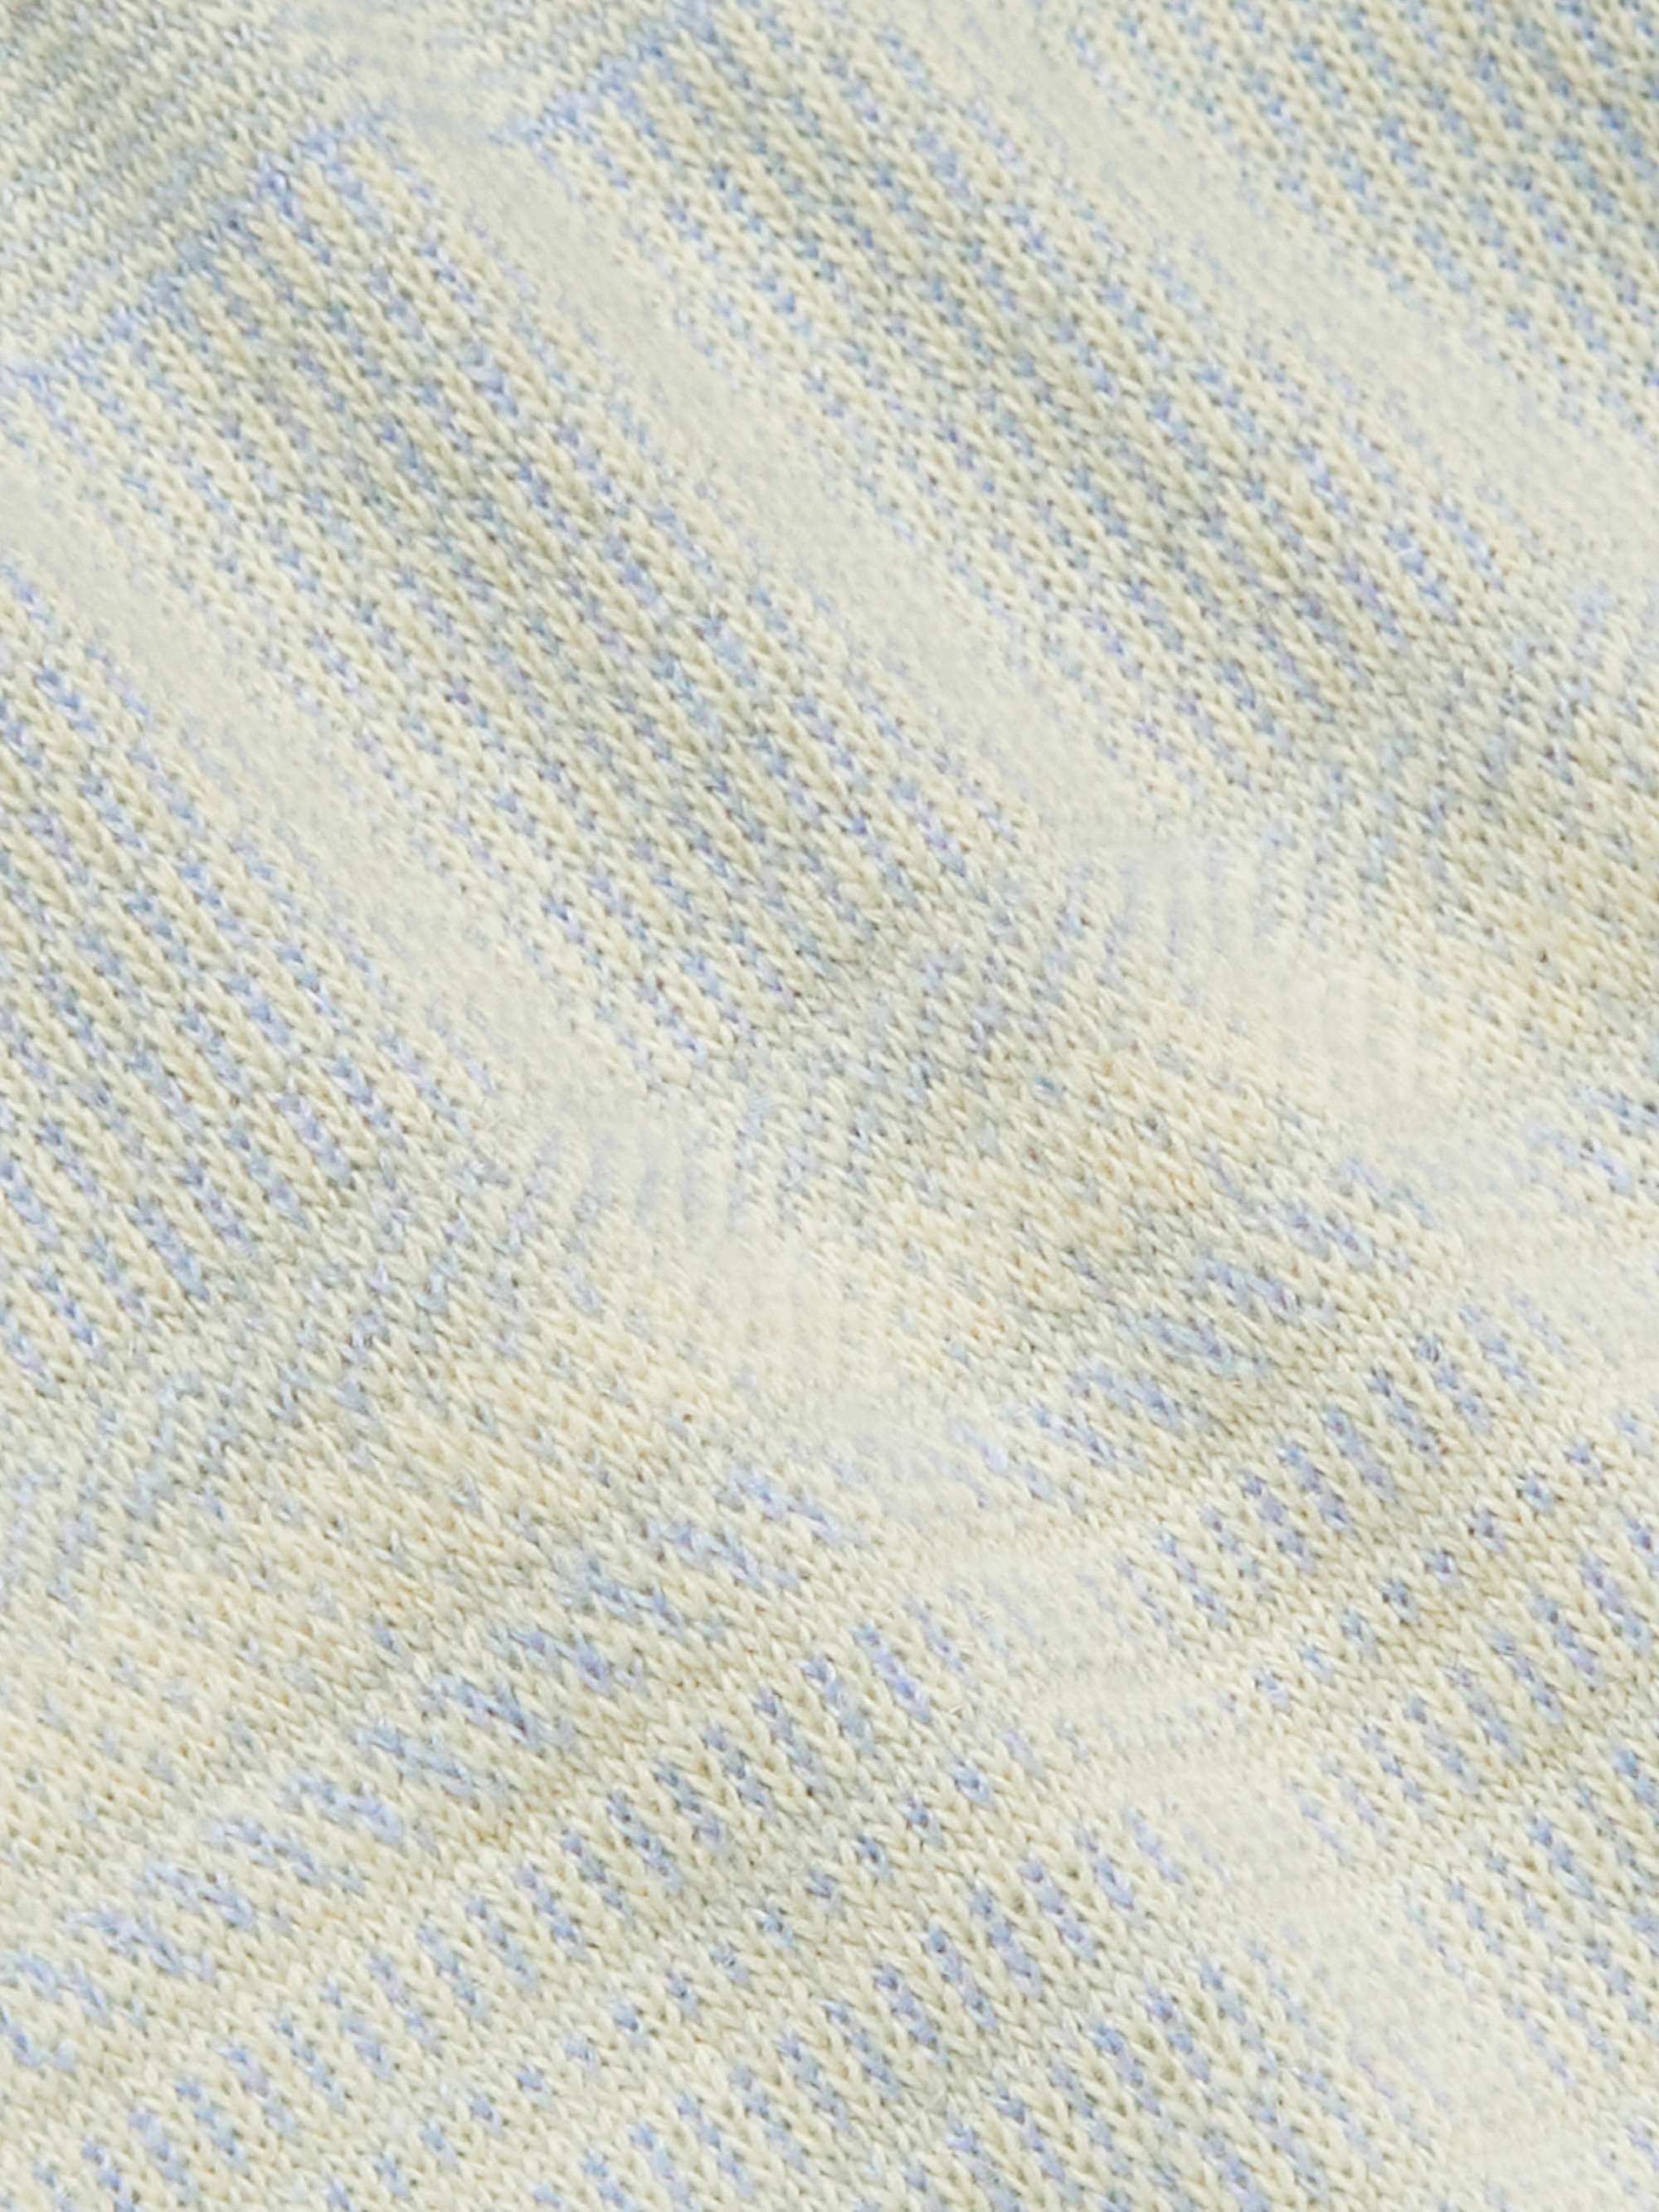 ASPESI Striped Virgin Wool-Blend Jacquard Sweater